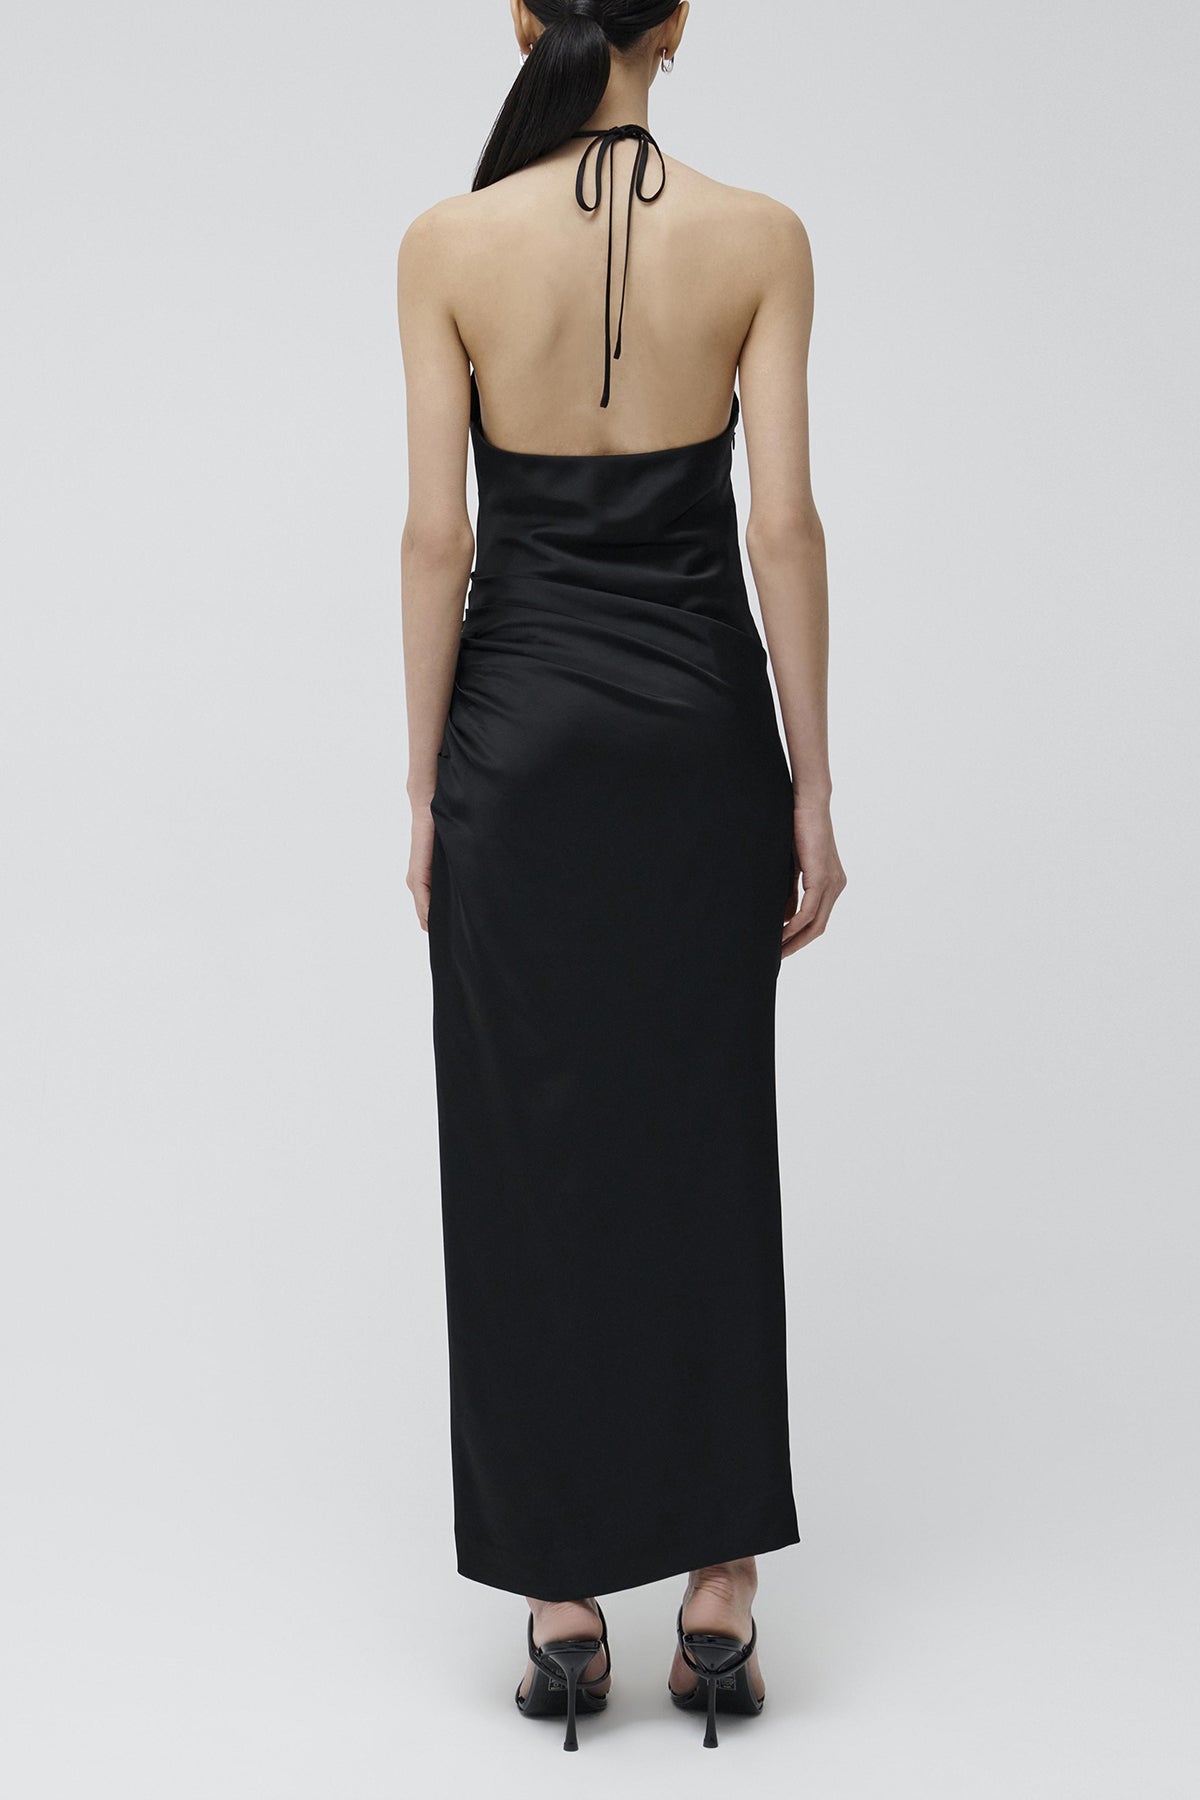 Hansel Gown in Black - shop-olivia.com